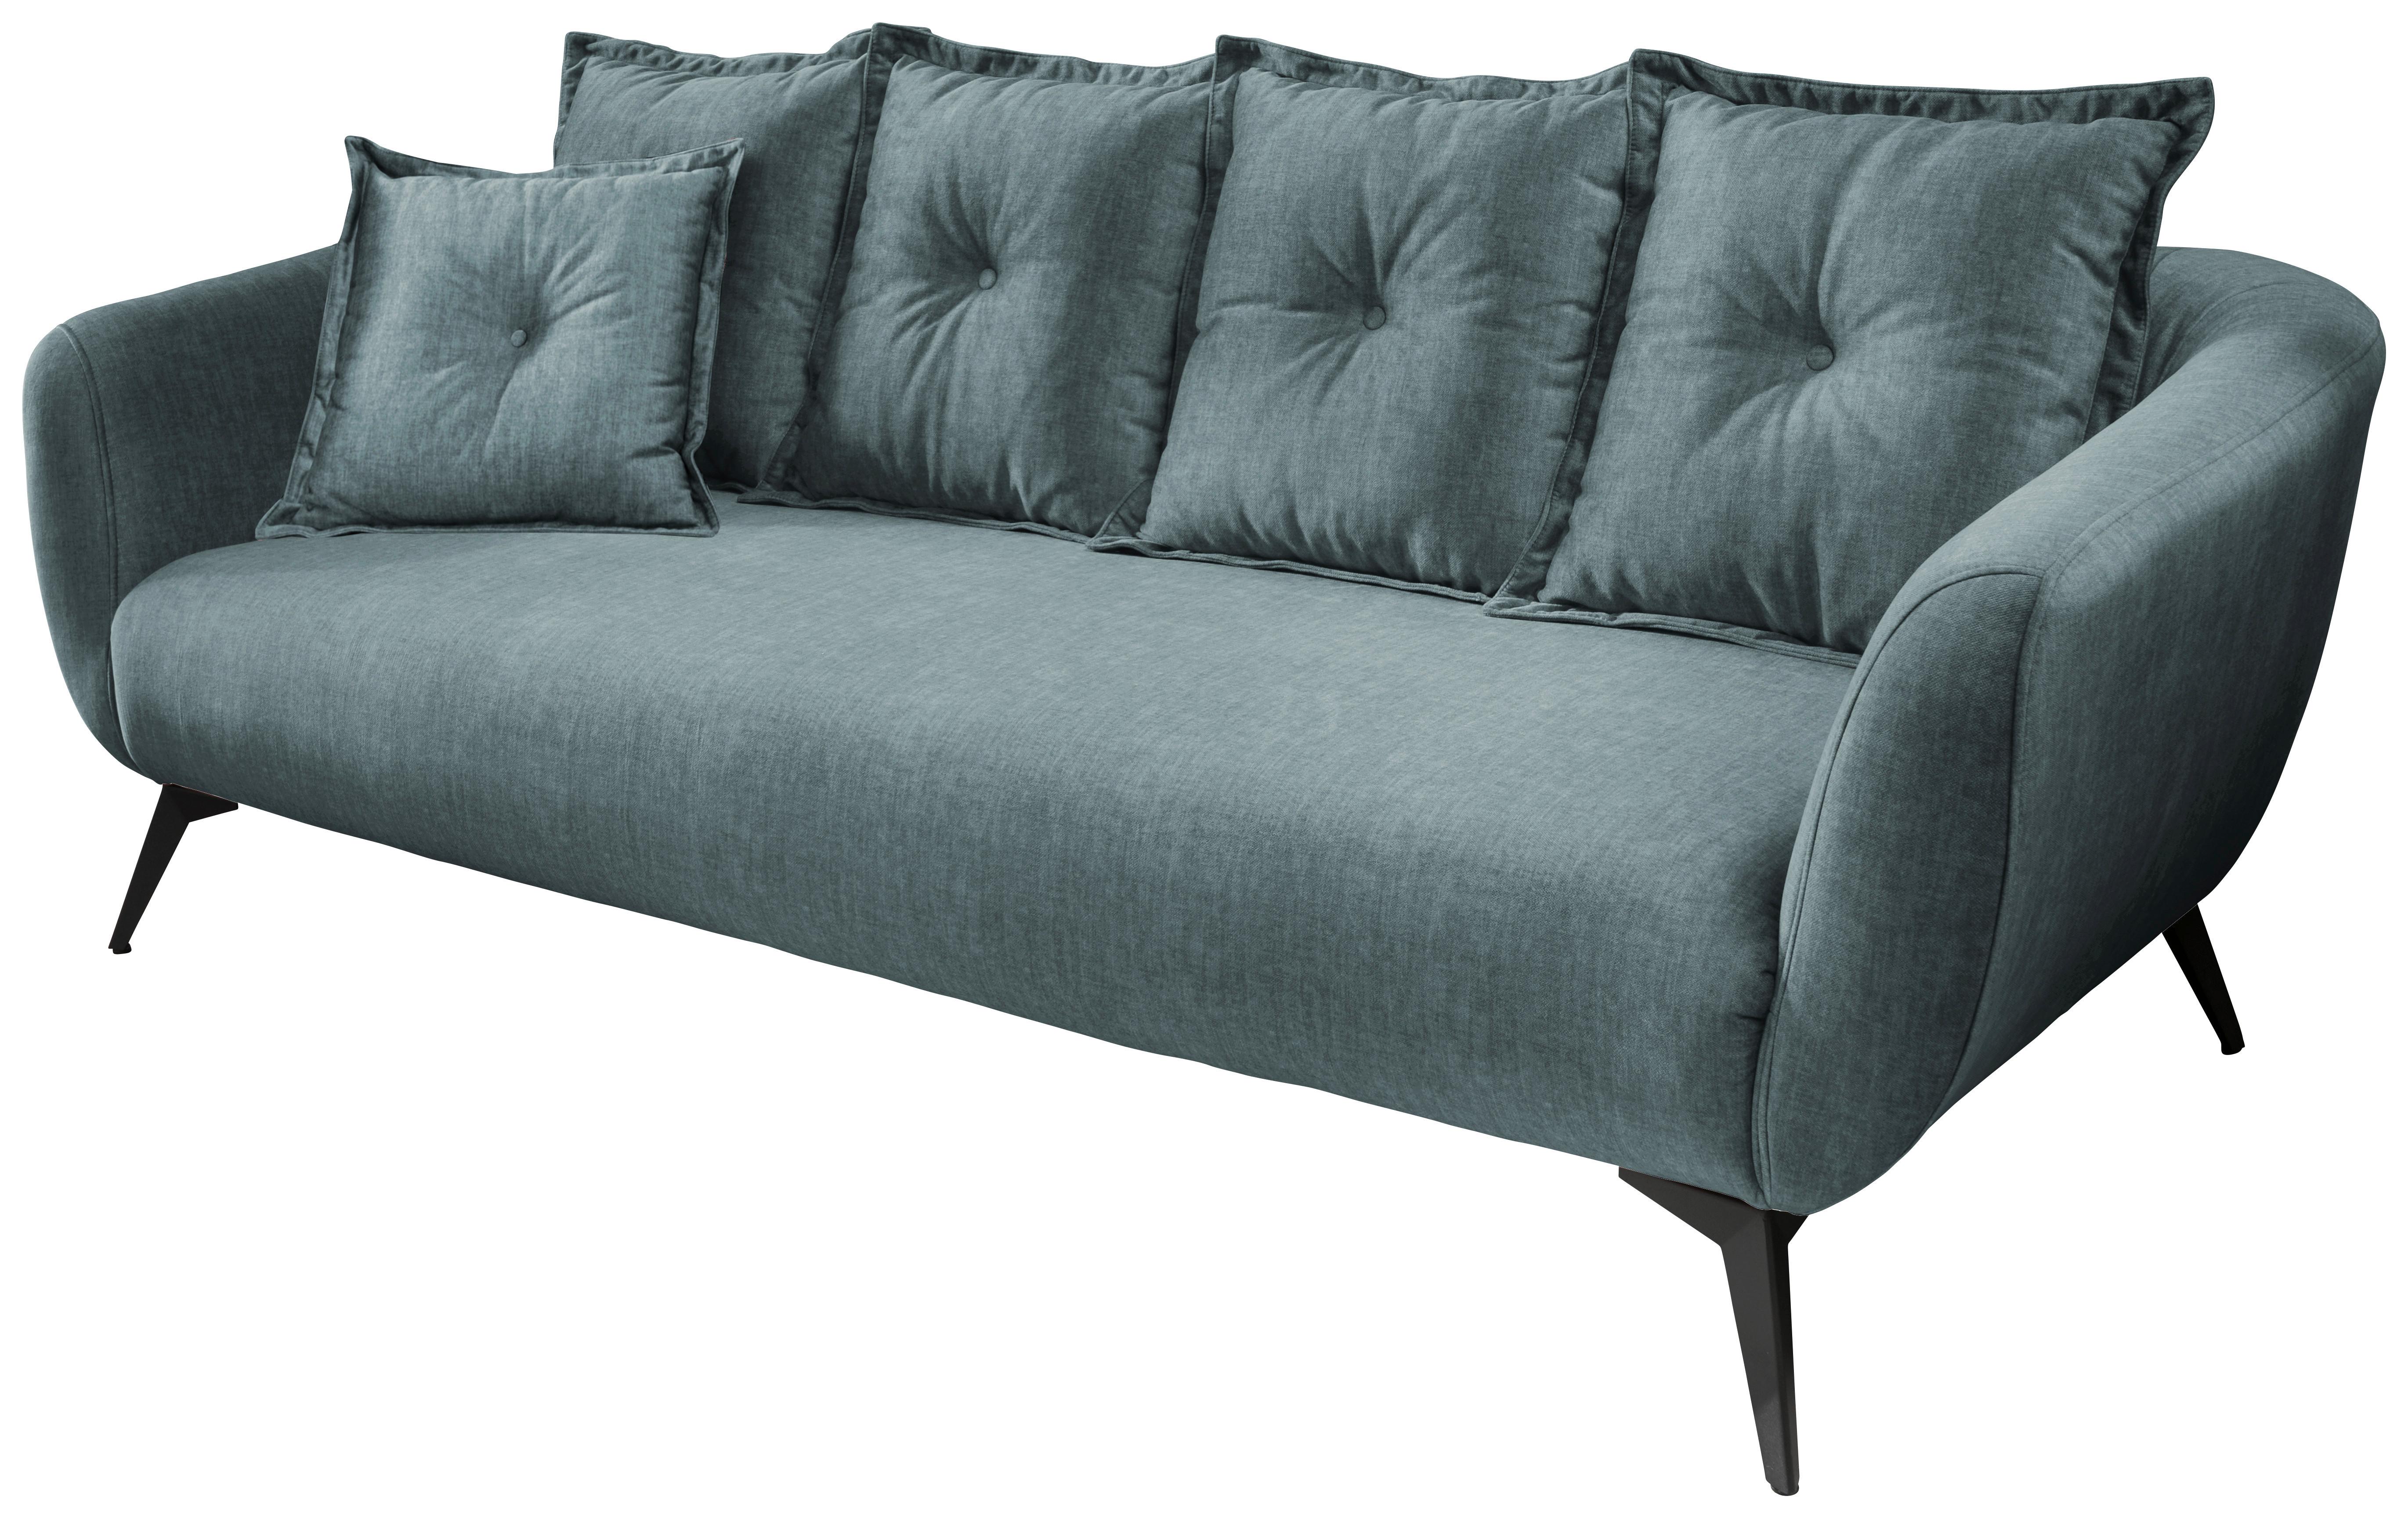 3-Sitzer-Sofa Baggio mit Kissen Blau - Blau/Schwarz, MODERN, Holz/Textil (236/94/103cm) - Livetastic